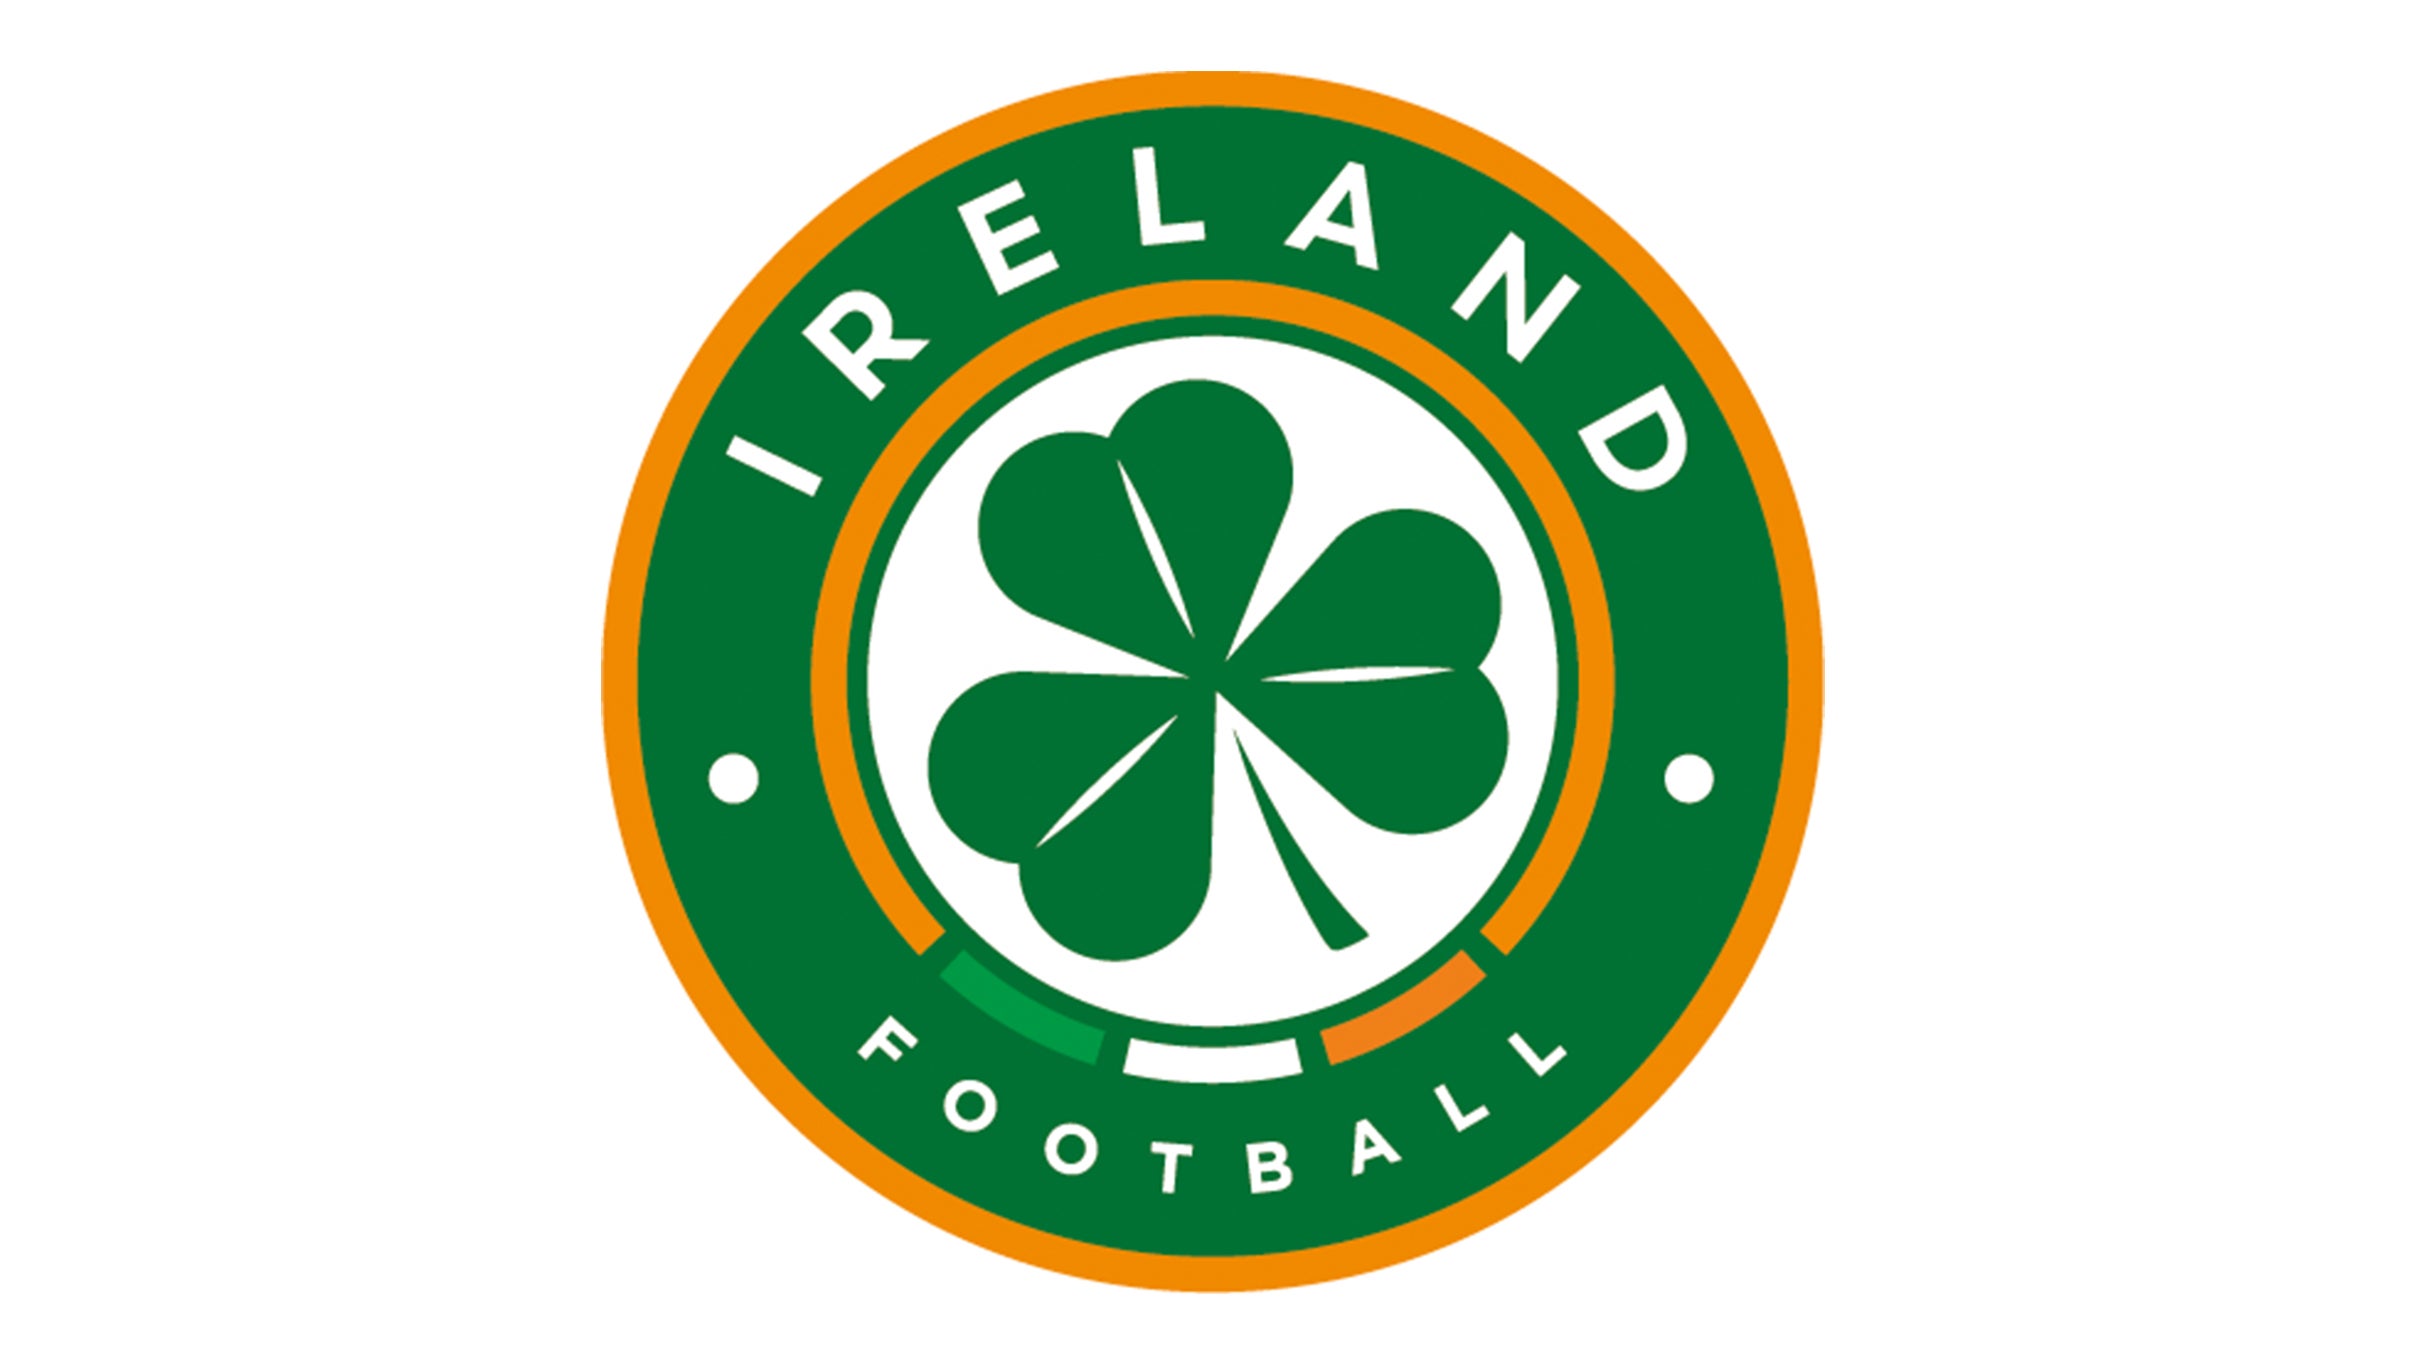 International Friendly - Republic of Ireland V Hungary in Dublin promo photo for FAI presale offer code